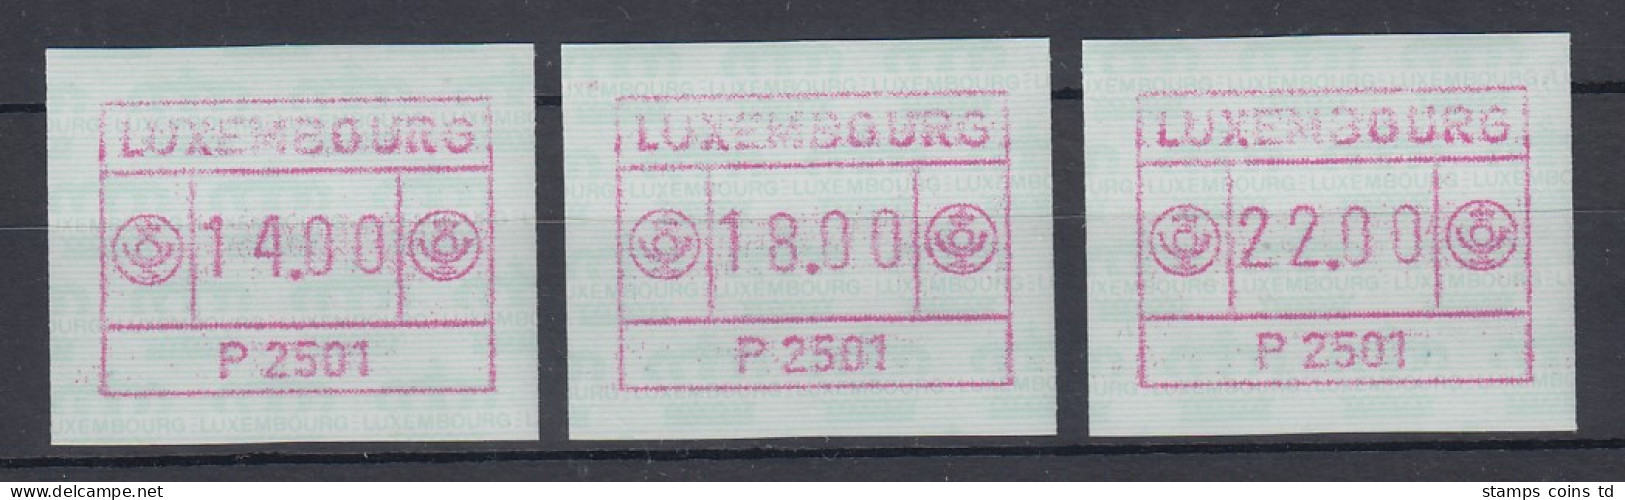 Luxemburg ATM P2501 Rotlila Tastensatz 14-18-22 **   - Vignettes D'affranchissement